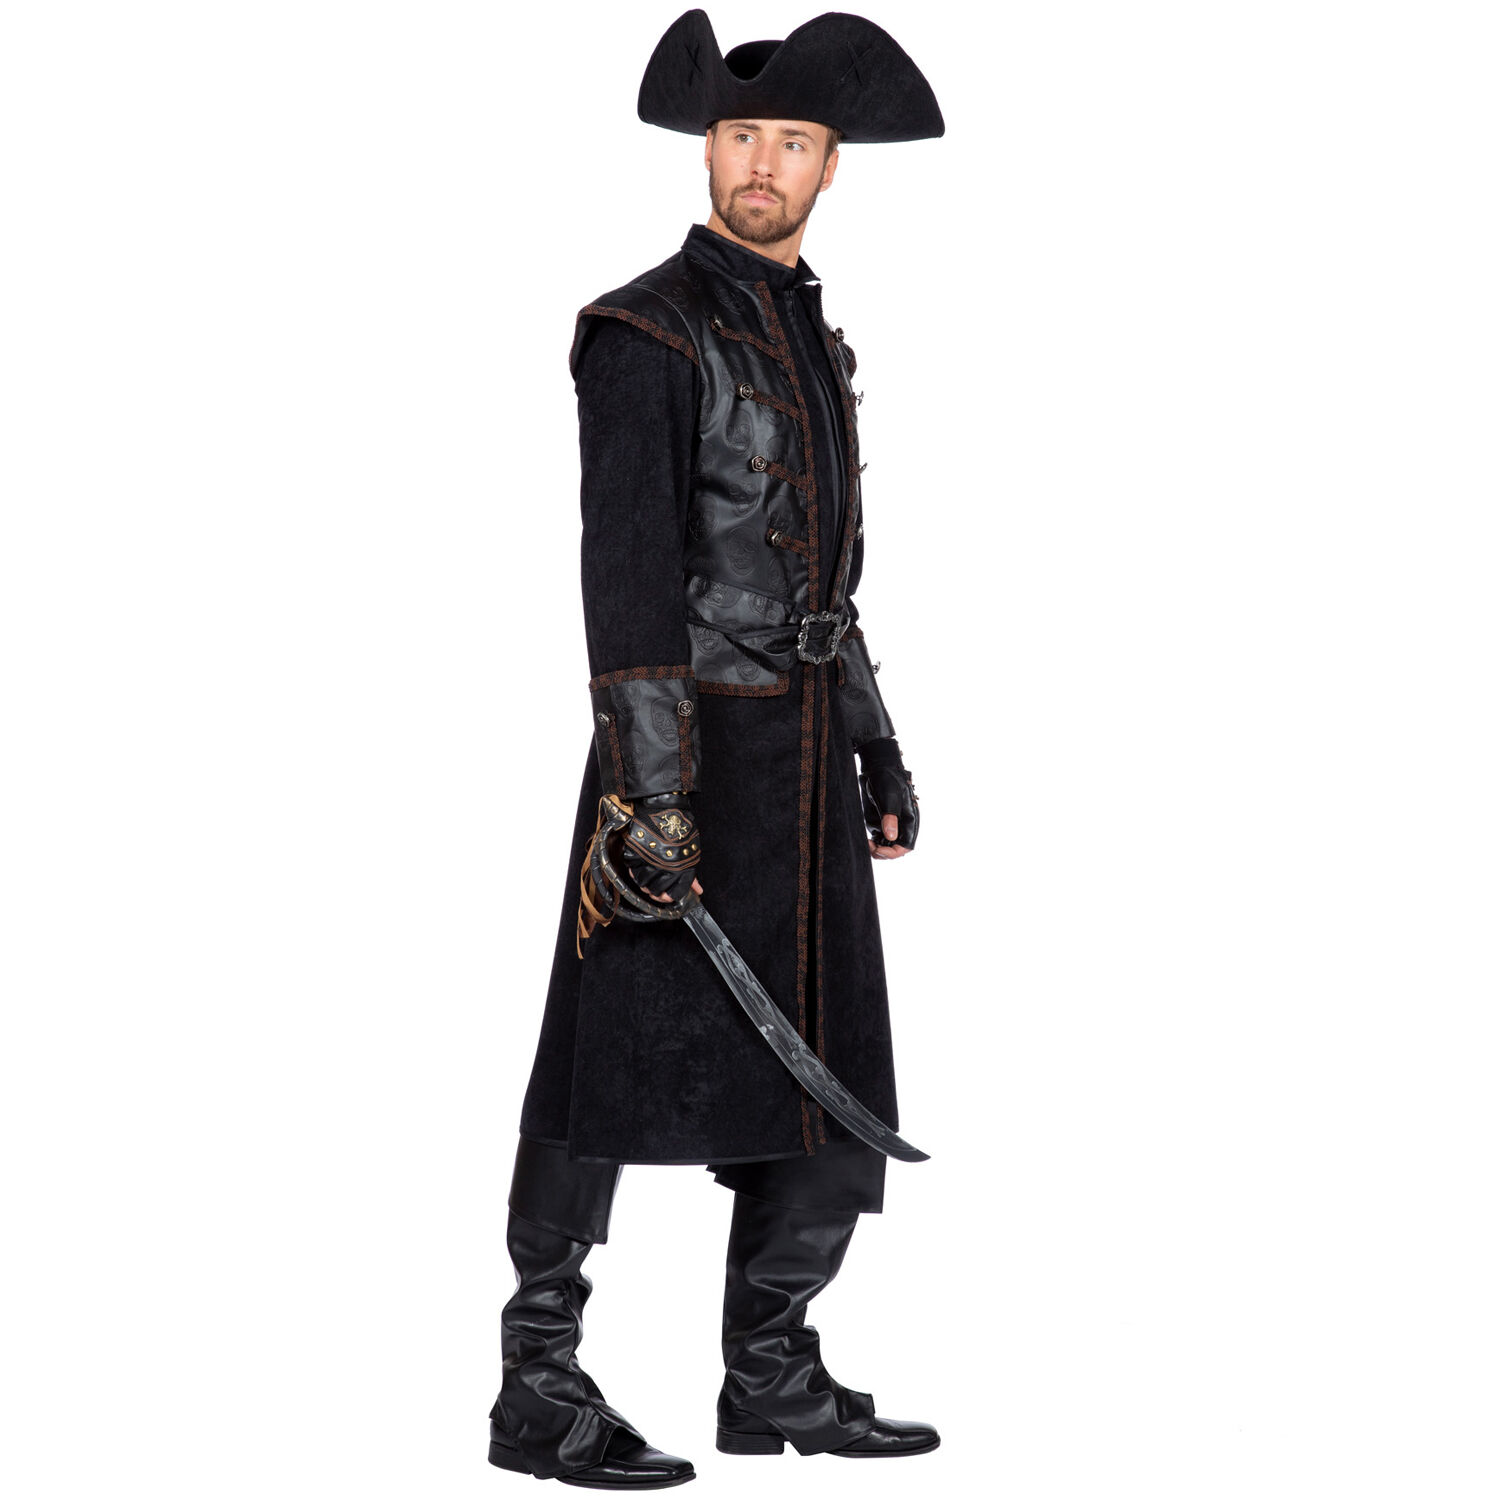 Herren-Kostüm schwarzer Pirat Deluxe, Gr. 48 Bild 2